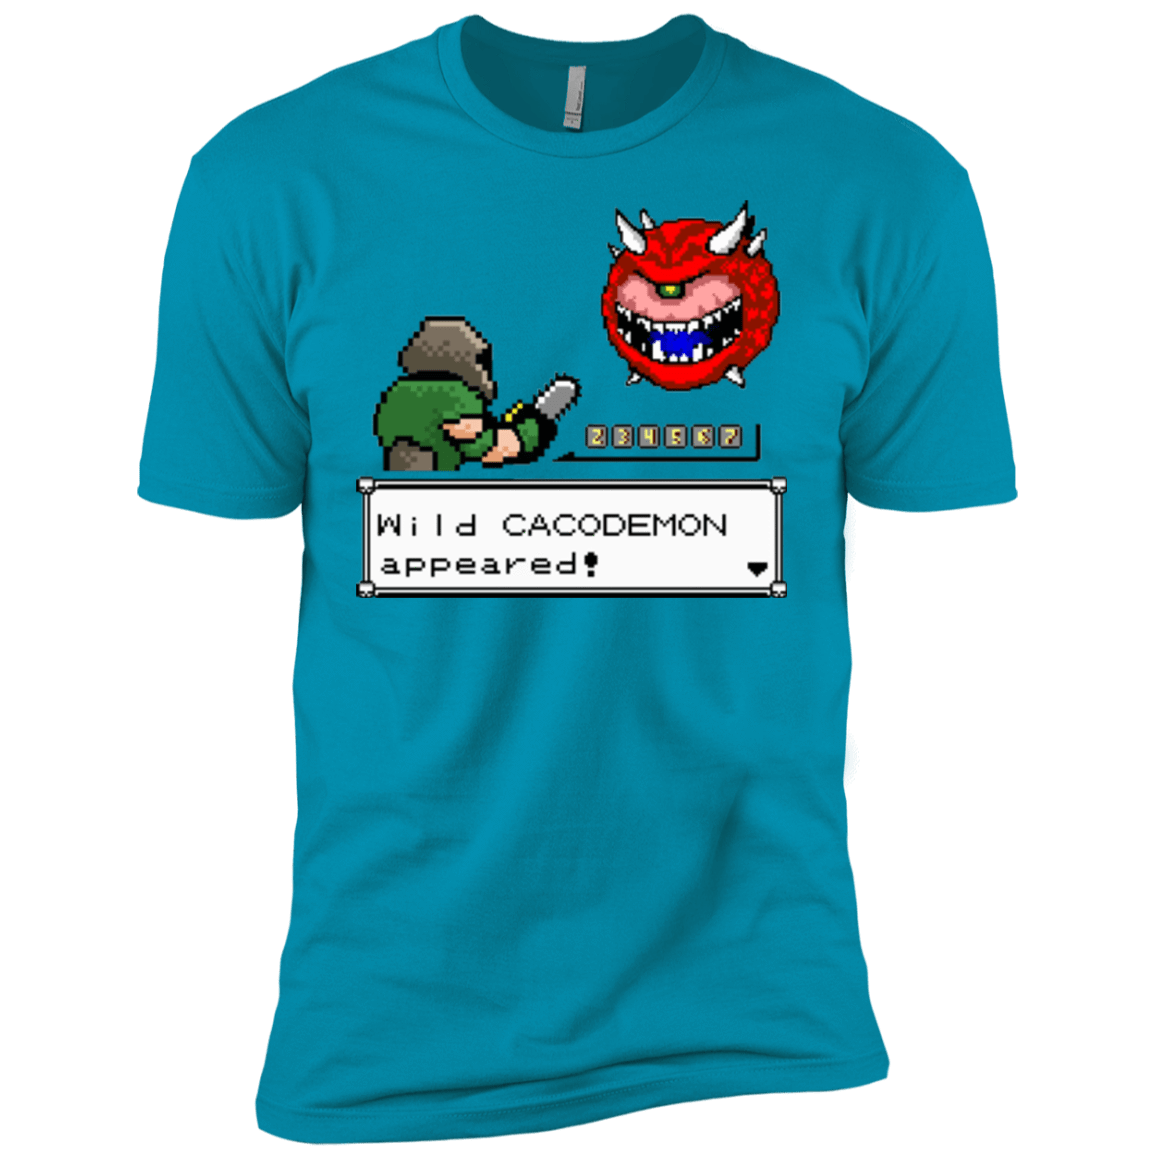 T-Shirts Turquoise / YXS A Wild Cacodemon Boys Premium T-Shirt